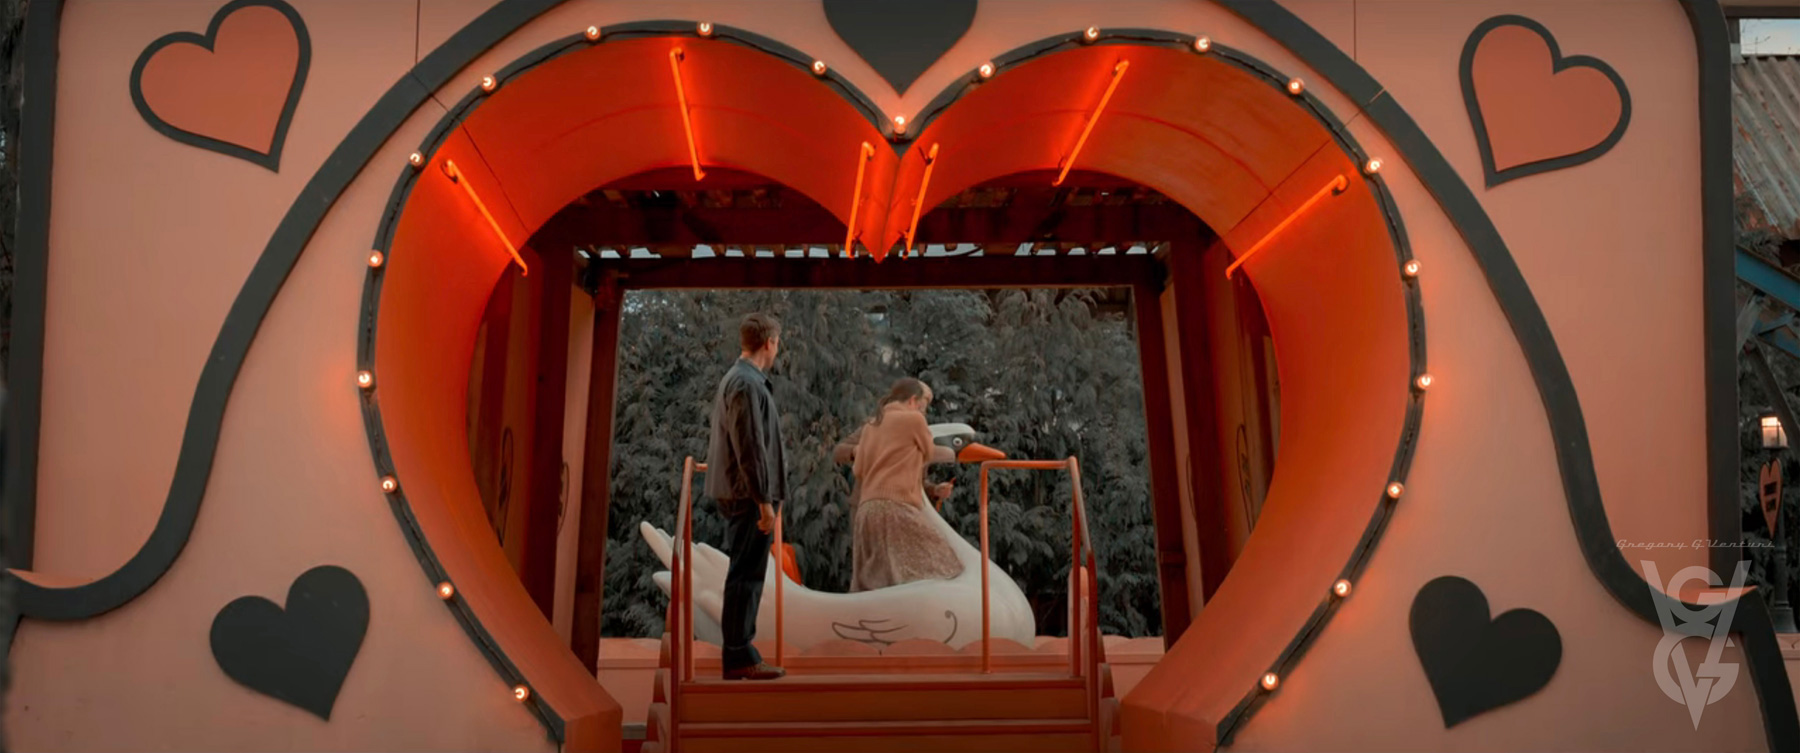 6 Lost Ollie 'Dreamland Amusement Park' Tunnel Of Love Swan Boat Ride Location Install Screen Still